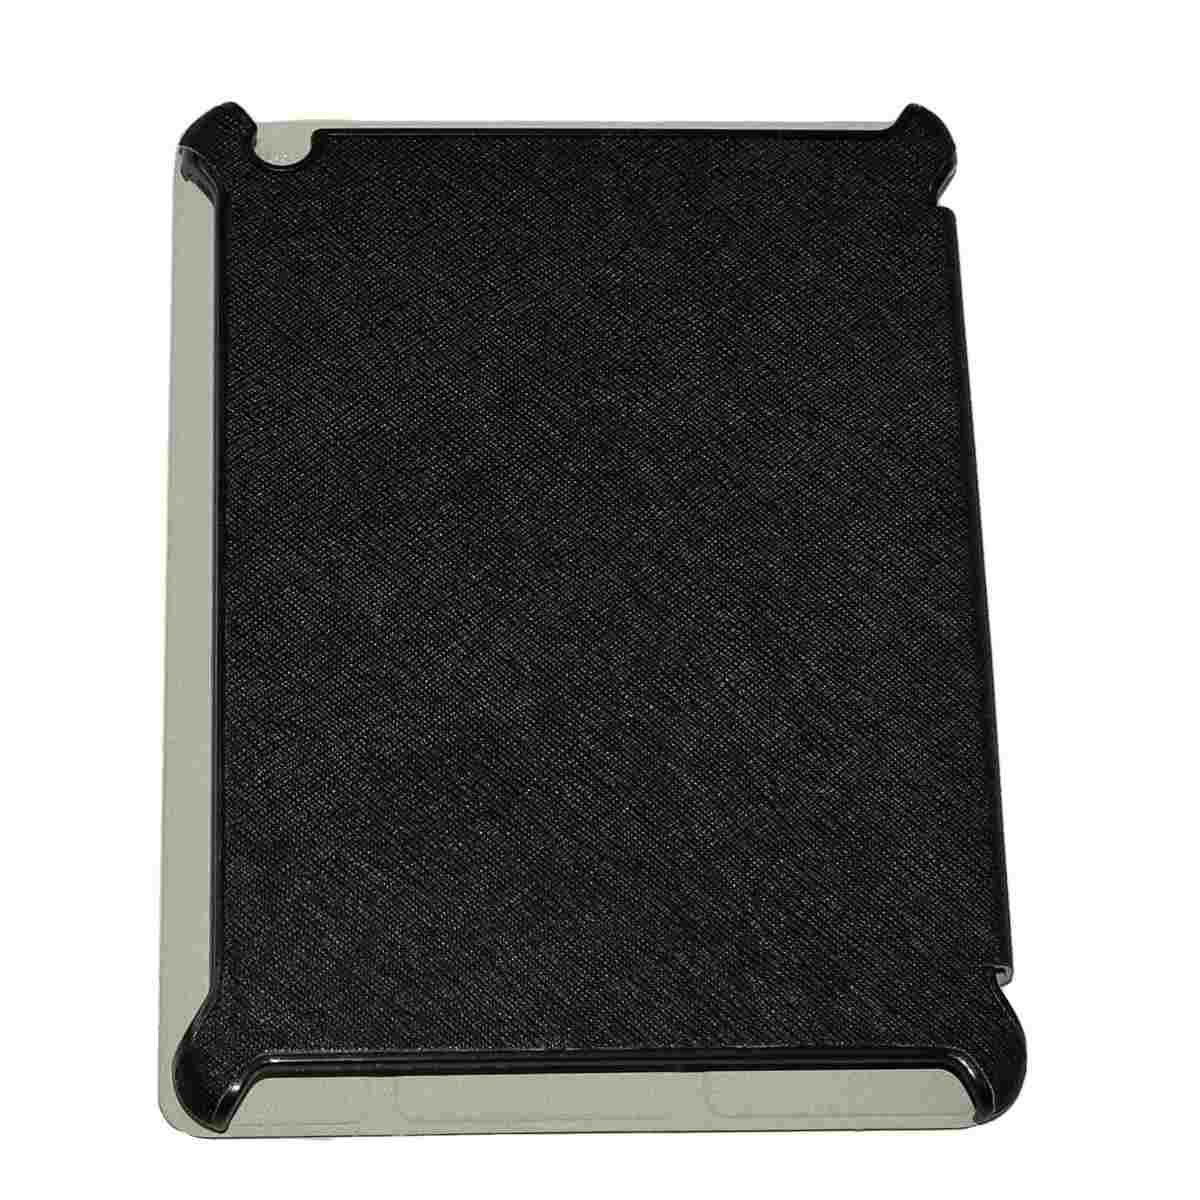 Cover Tablet Ipad Mini Ecopelle Rosa cm.20x13,8x1 4 Colori